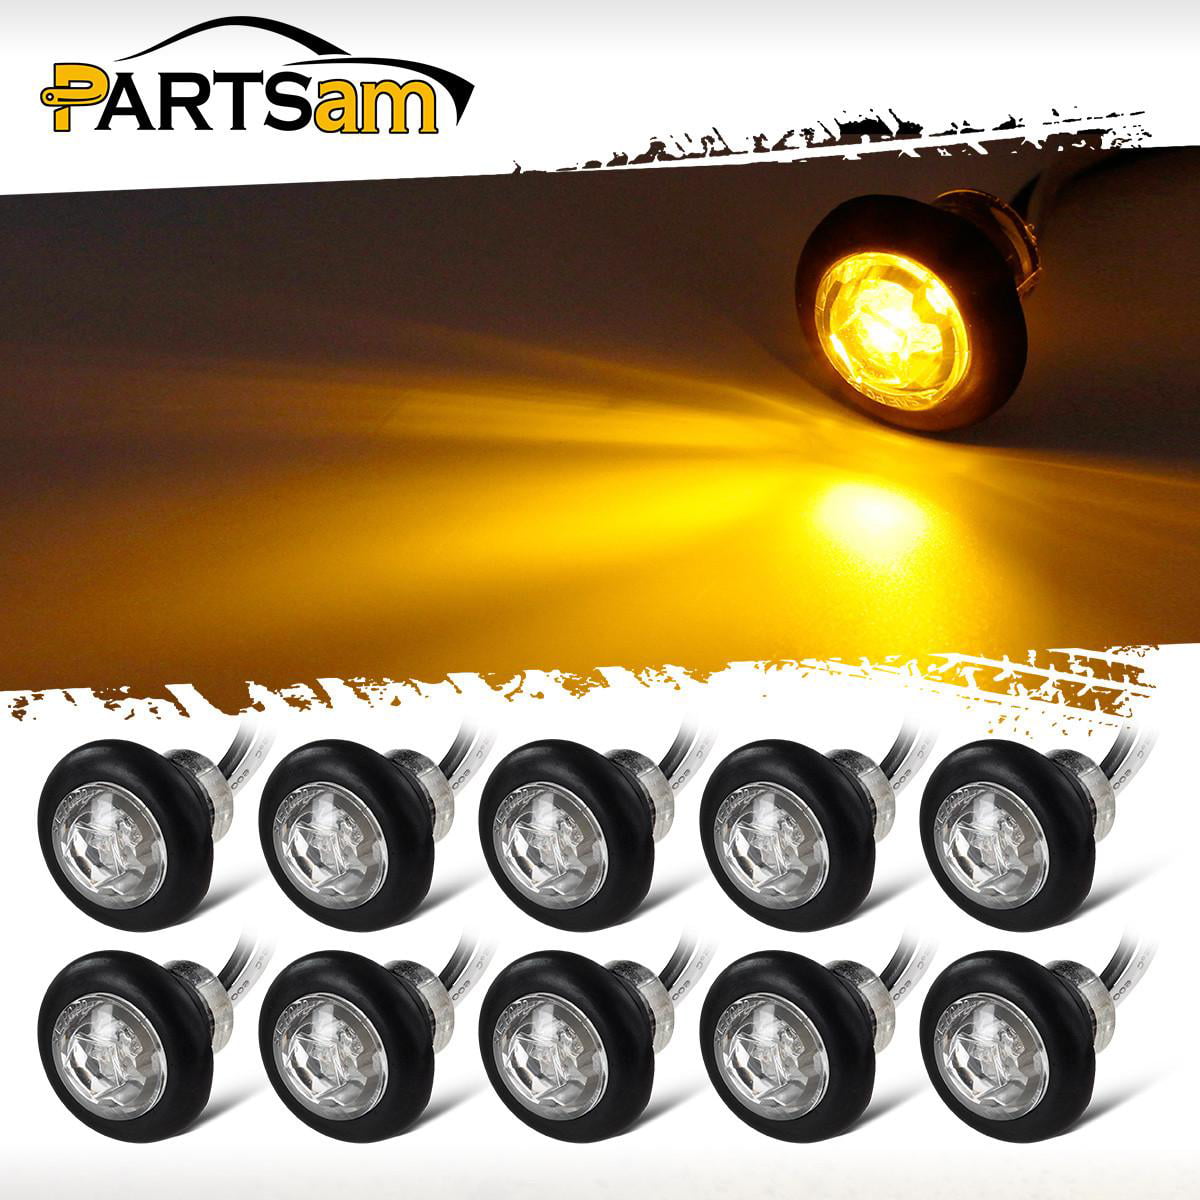 10x Amber 4 LED Clearance Side Marker Lights for Car RV Truck Trailer Pickup 12V 